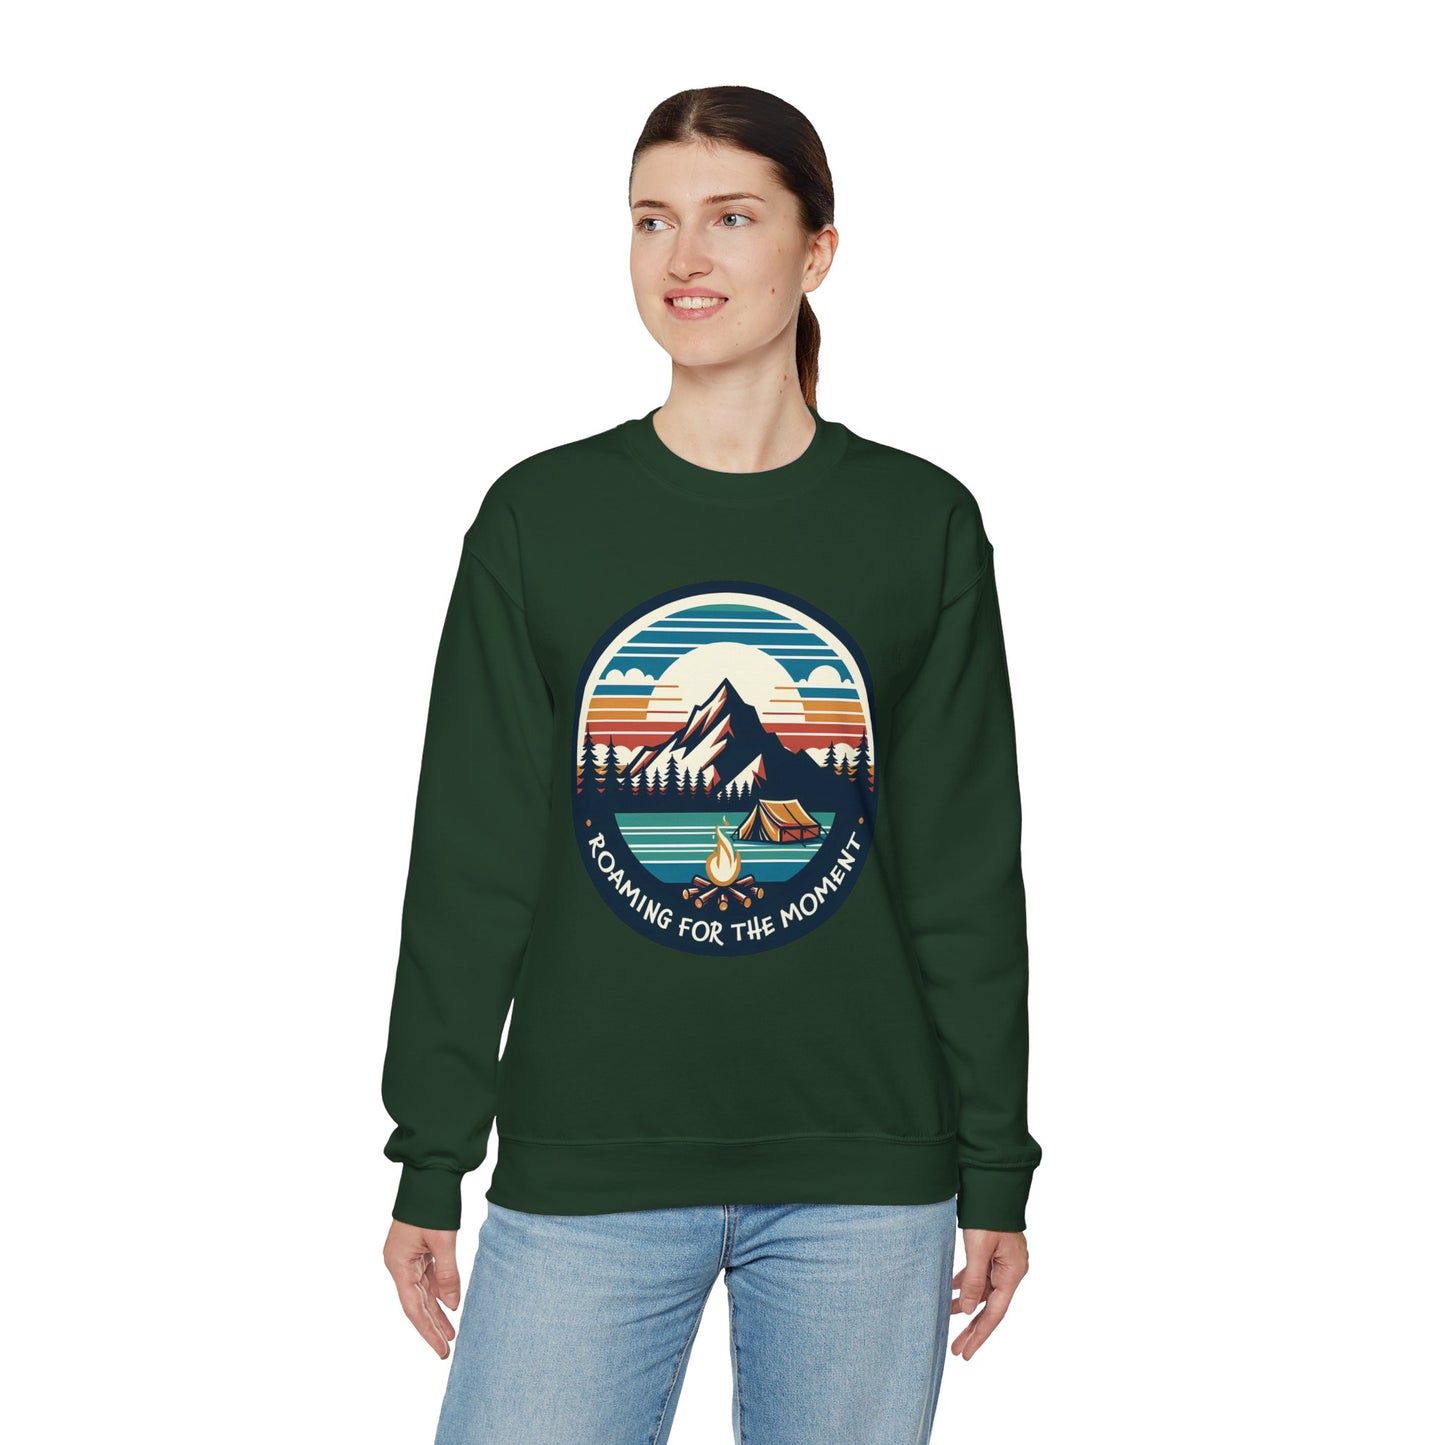 Camping Roaming Sweatshirt, Outdoor Adventures Crewneck, Retro Campfire Shirt, Gift for Camper Nature Wilderness Lovers